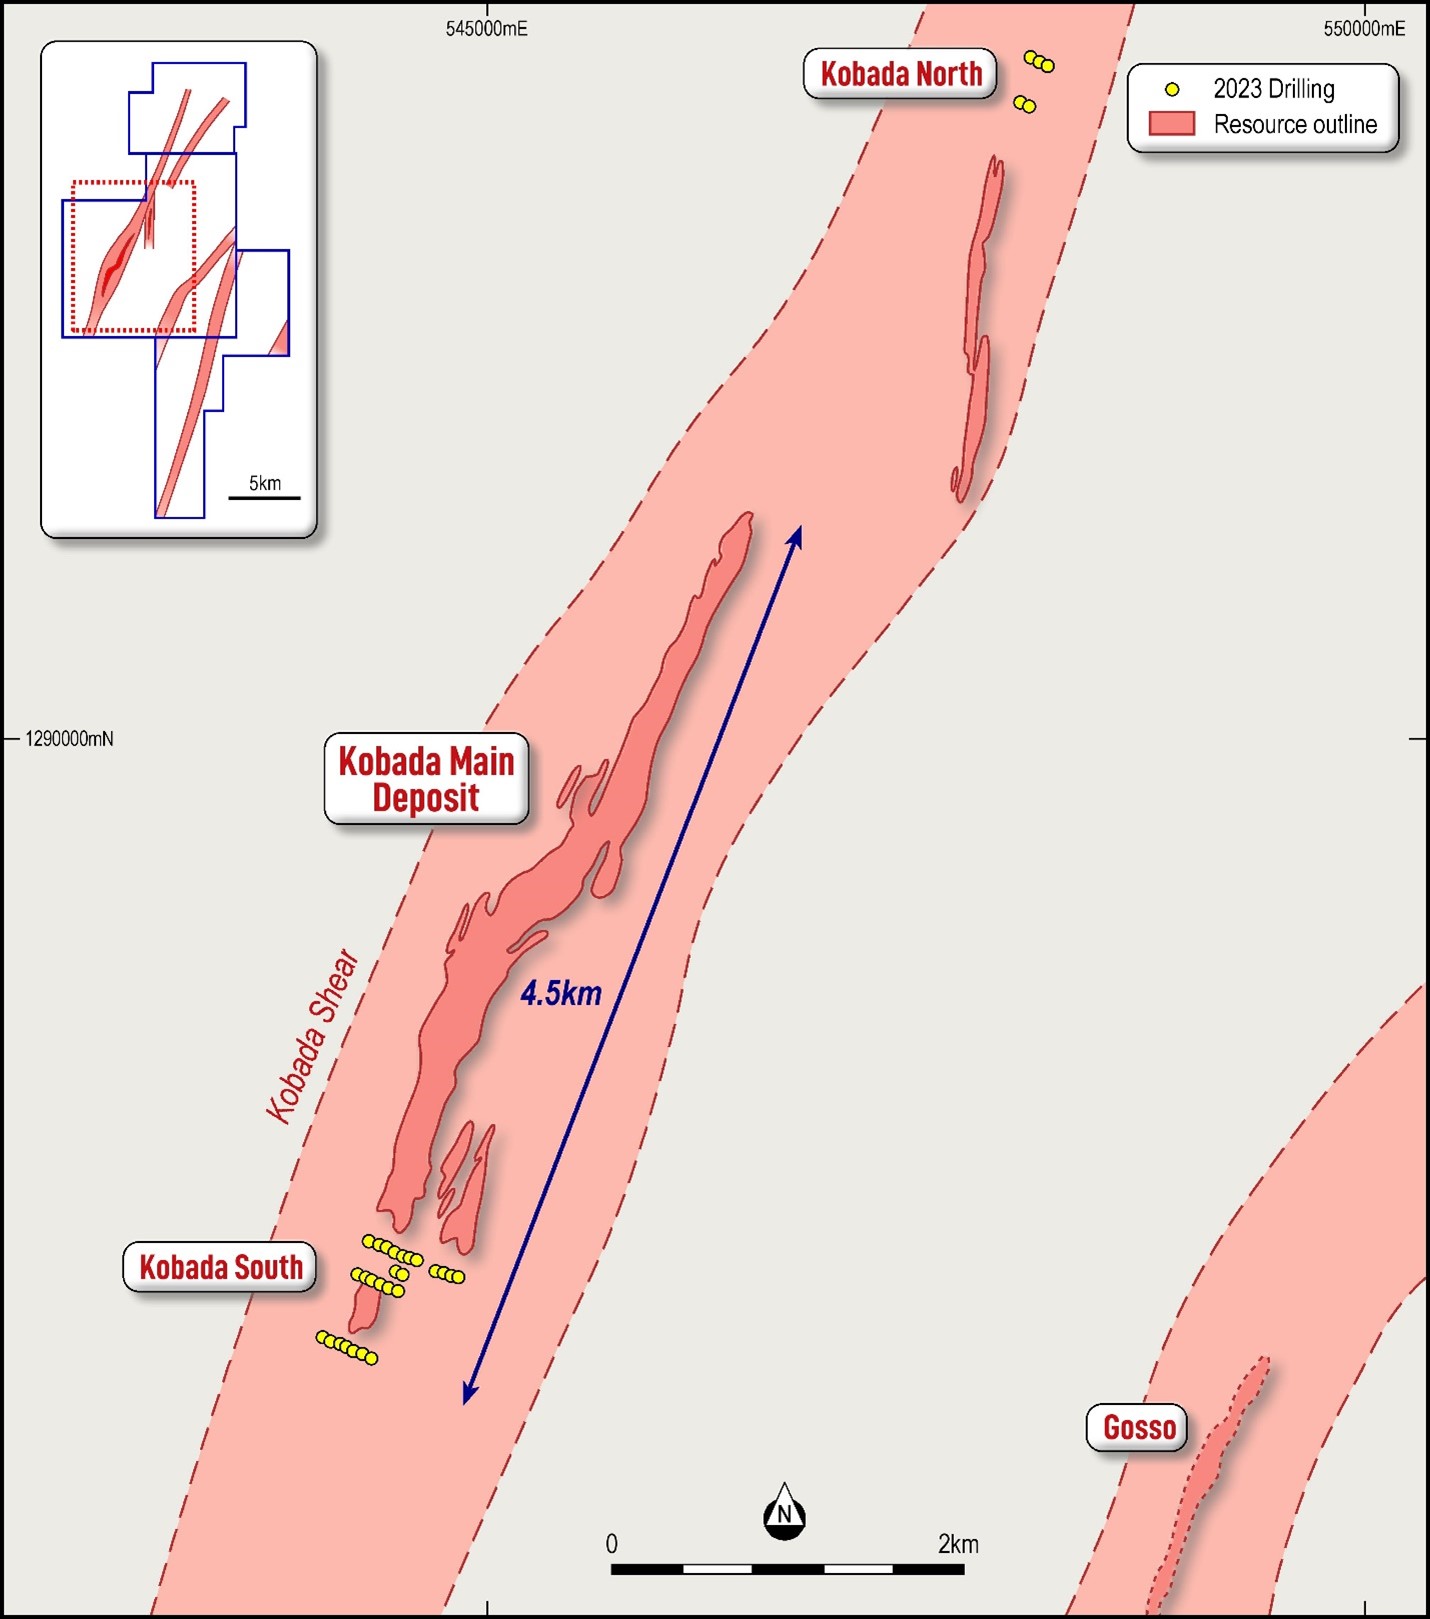 Plan showing location of Kobada North and Kobada South